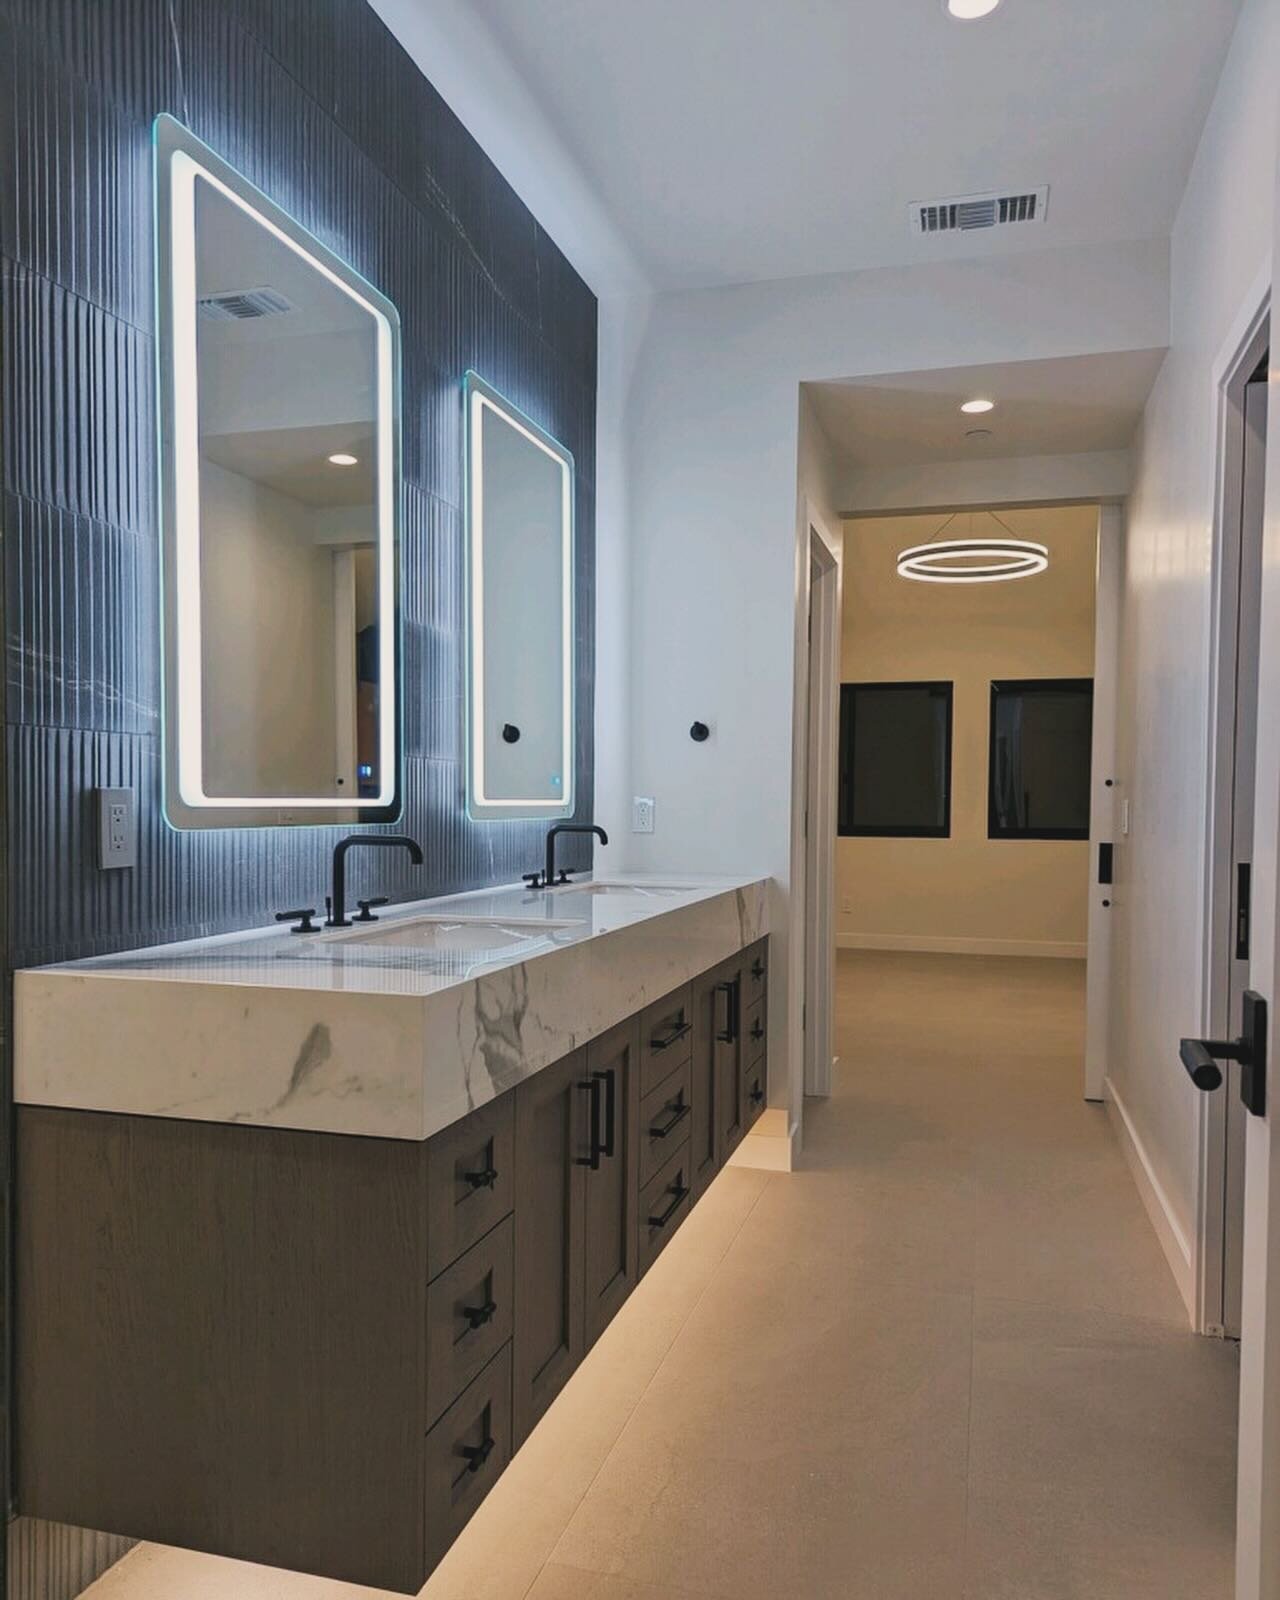 Elegant and sleek for this new modern master bath❣️#interiors #newbathroom #marble #texture #custom #renovation #modern #cali #coastal #design